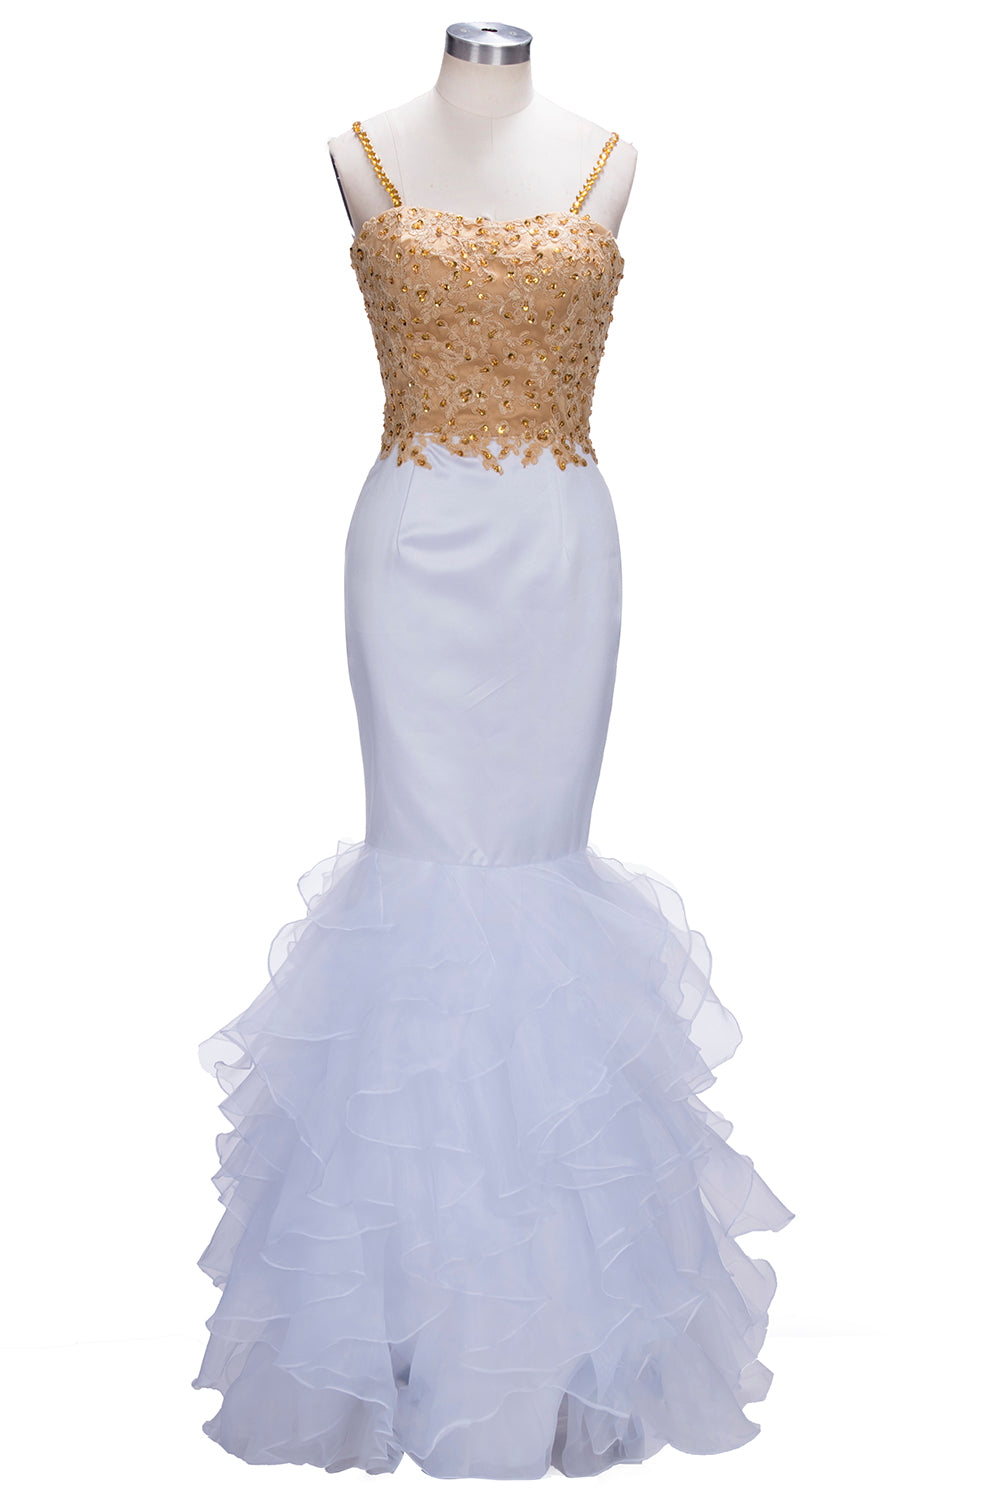 Ruffles Lace Appliques Sleeveless Evening Dress Spaghetti Strap Gold Beading Sexy Mermaid Prom Dress